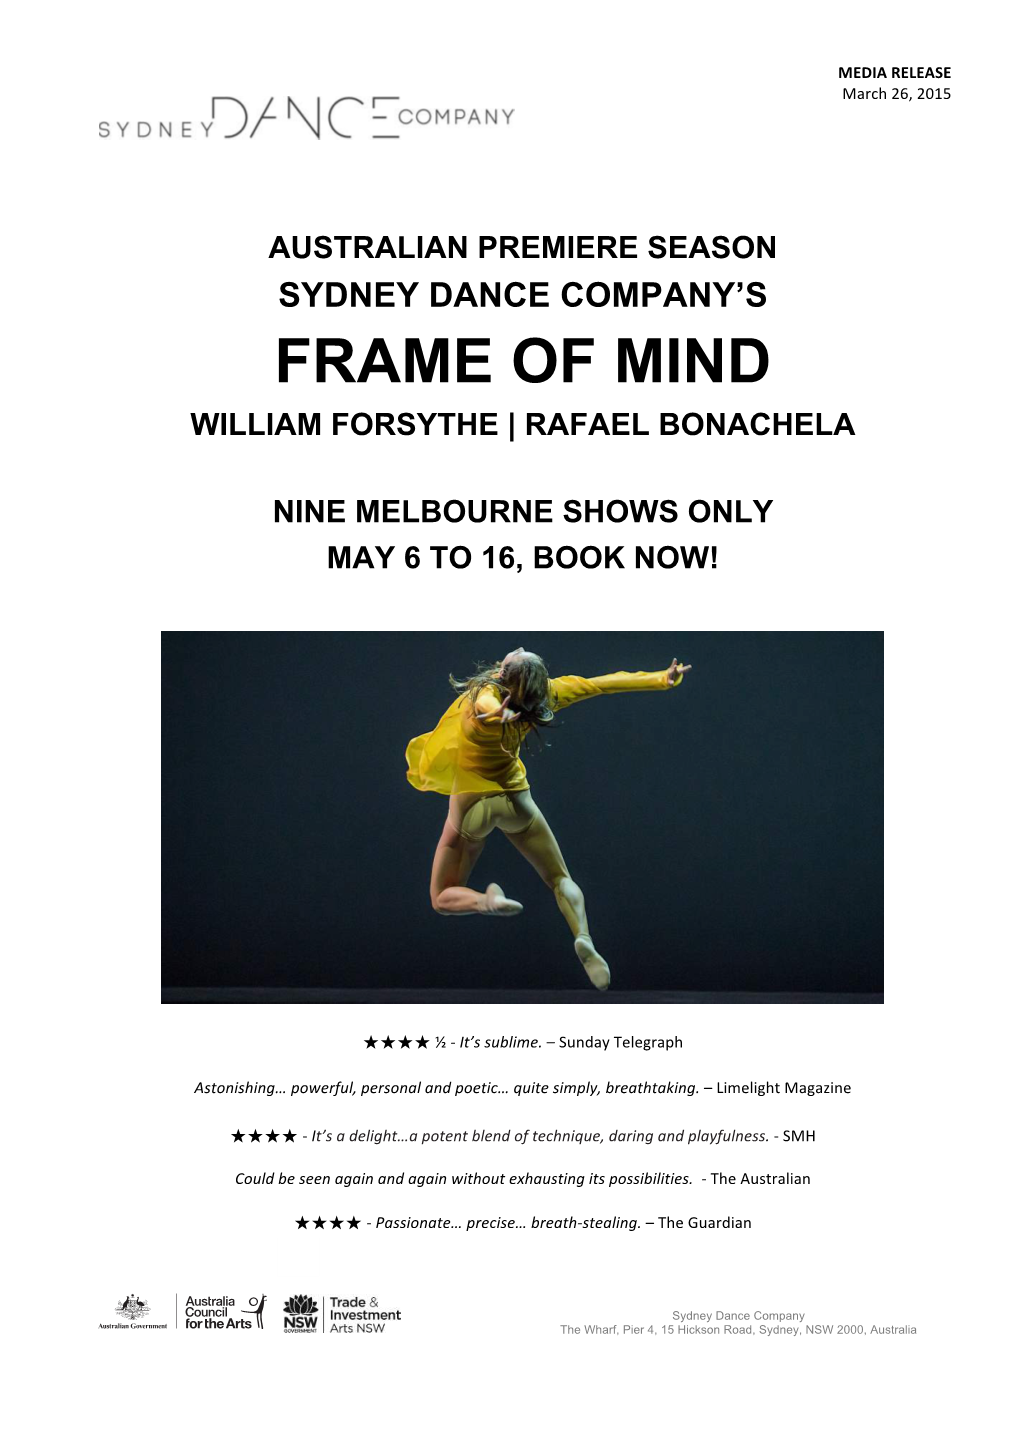 Frame of Mind William Forsythe | Rafael Bonachela